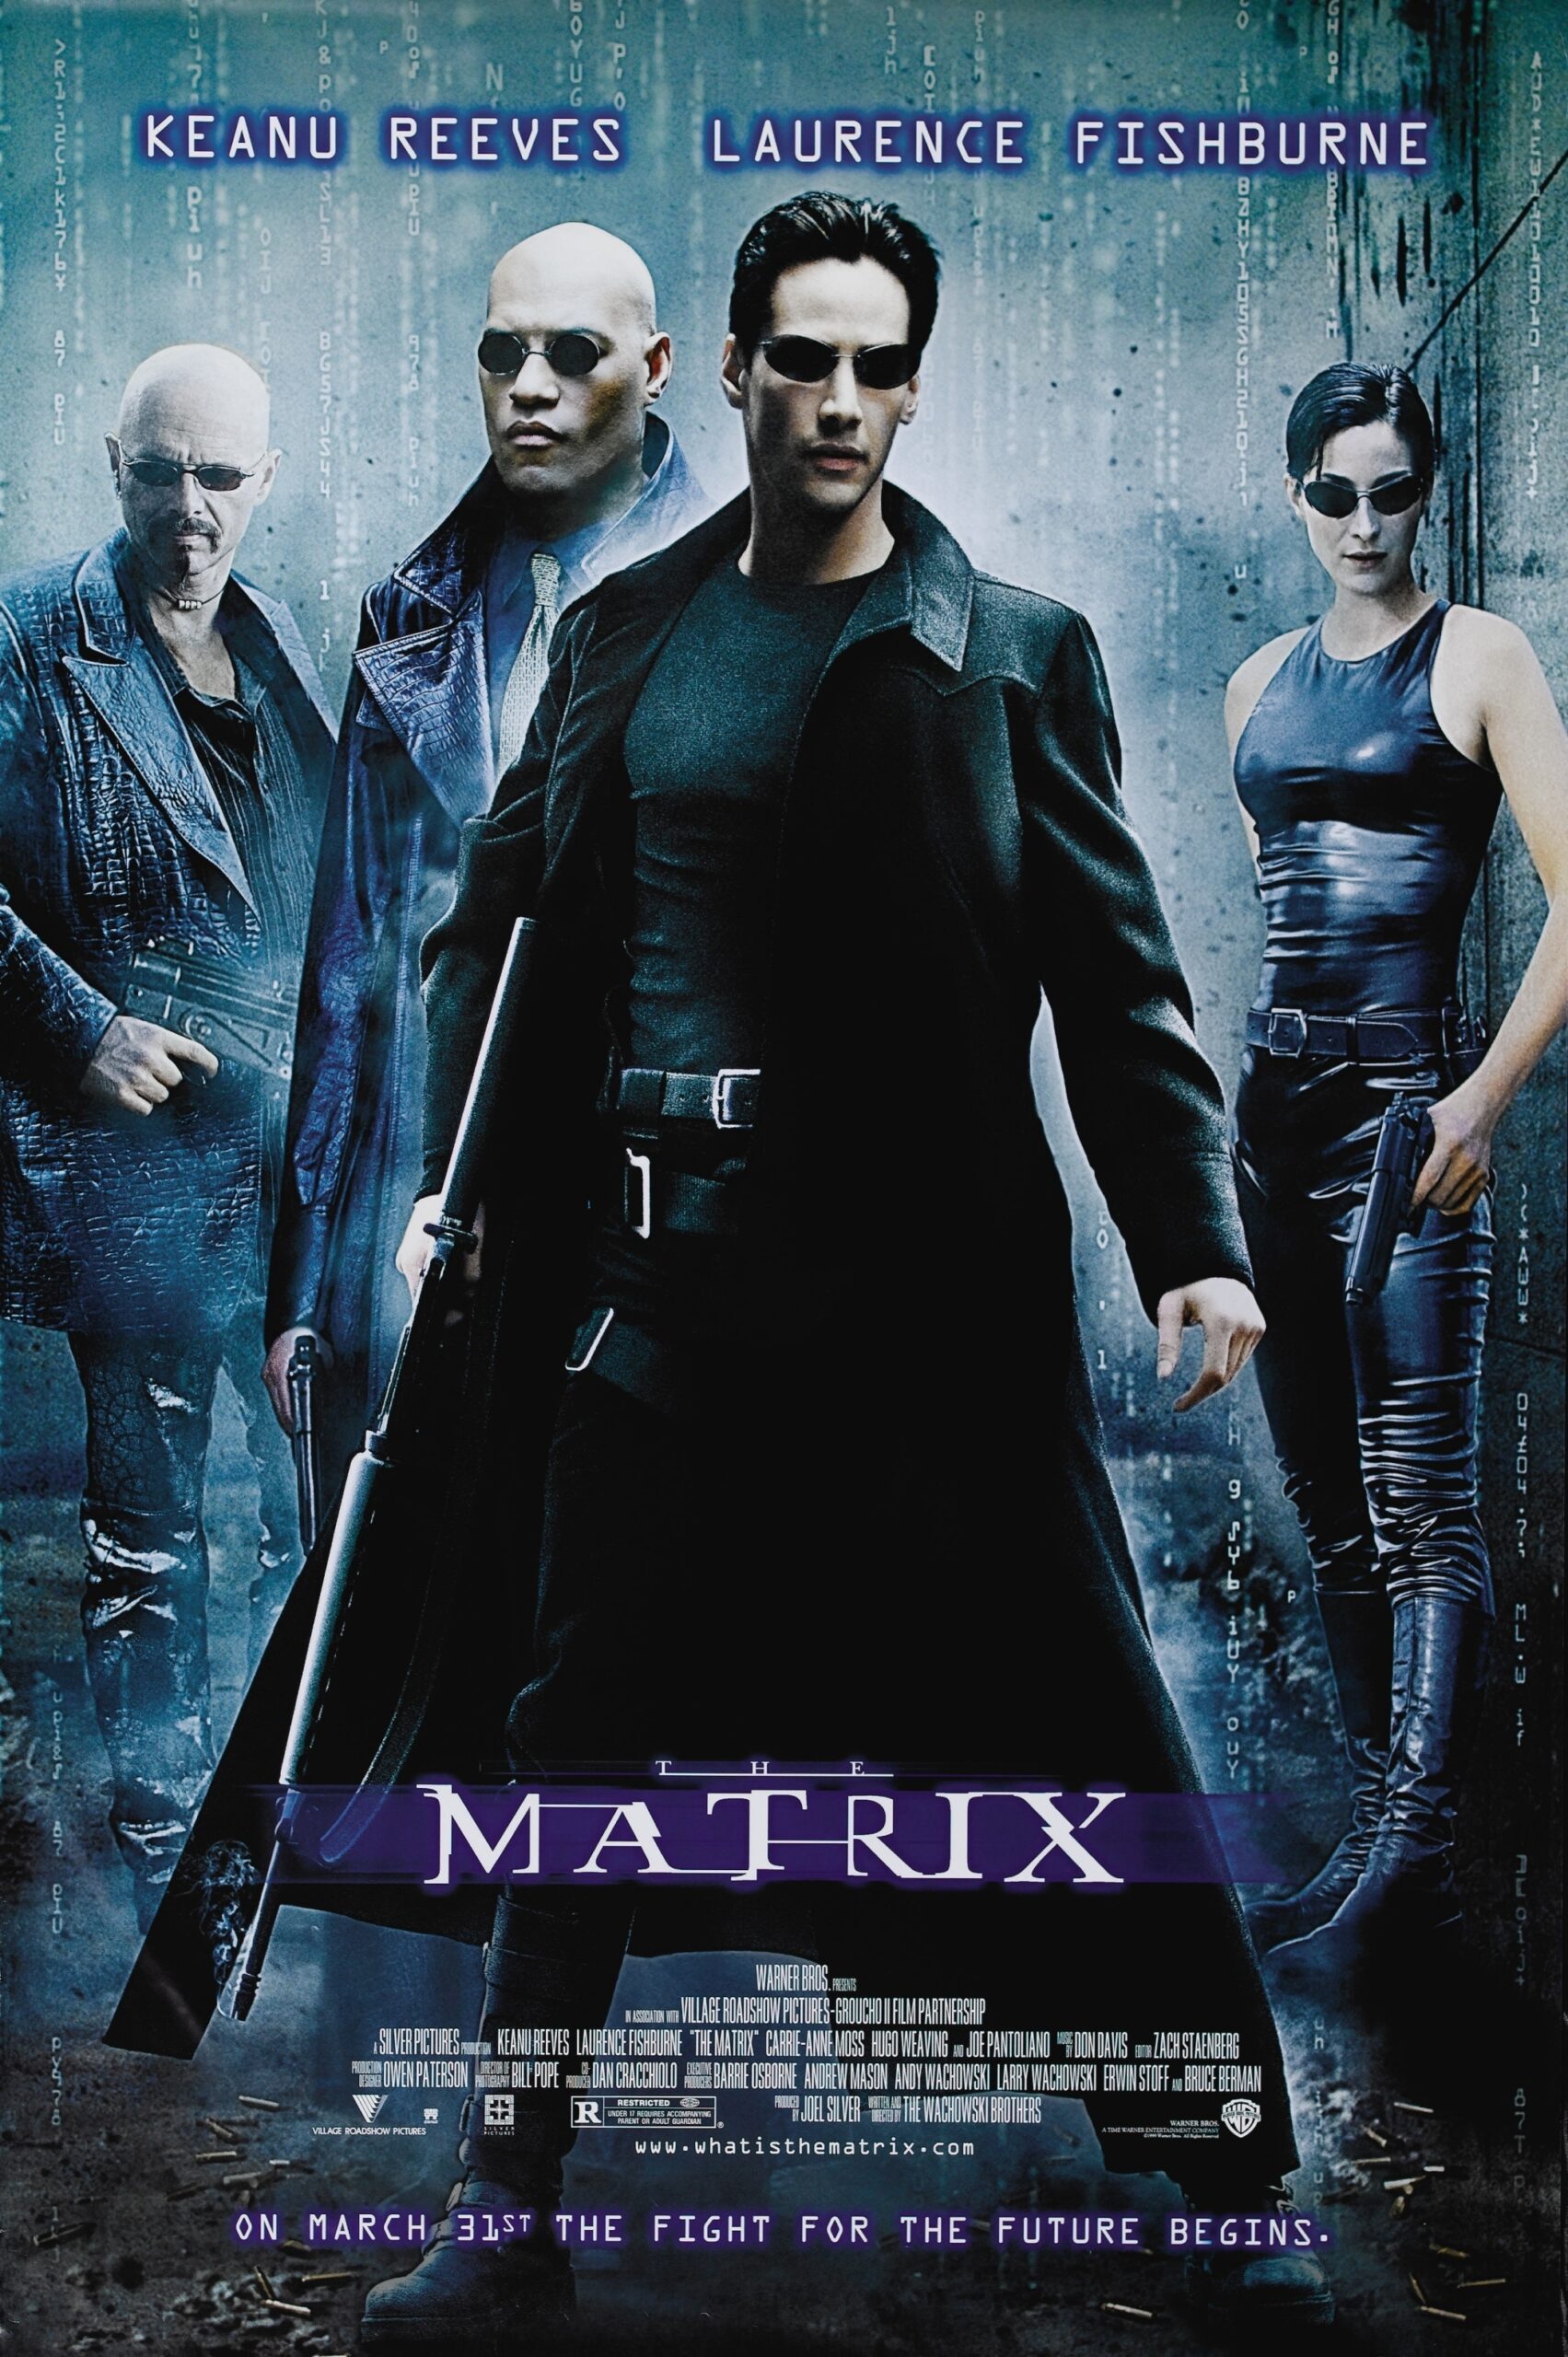 Be Afraid Of The Future - The Matrix (1999)